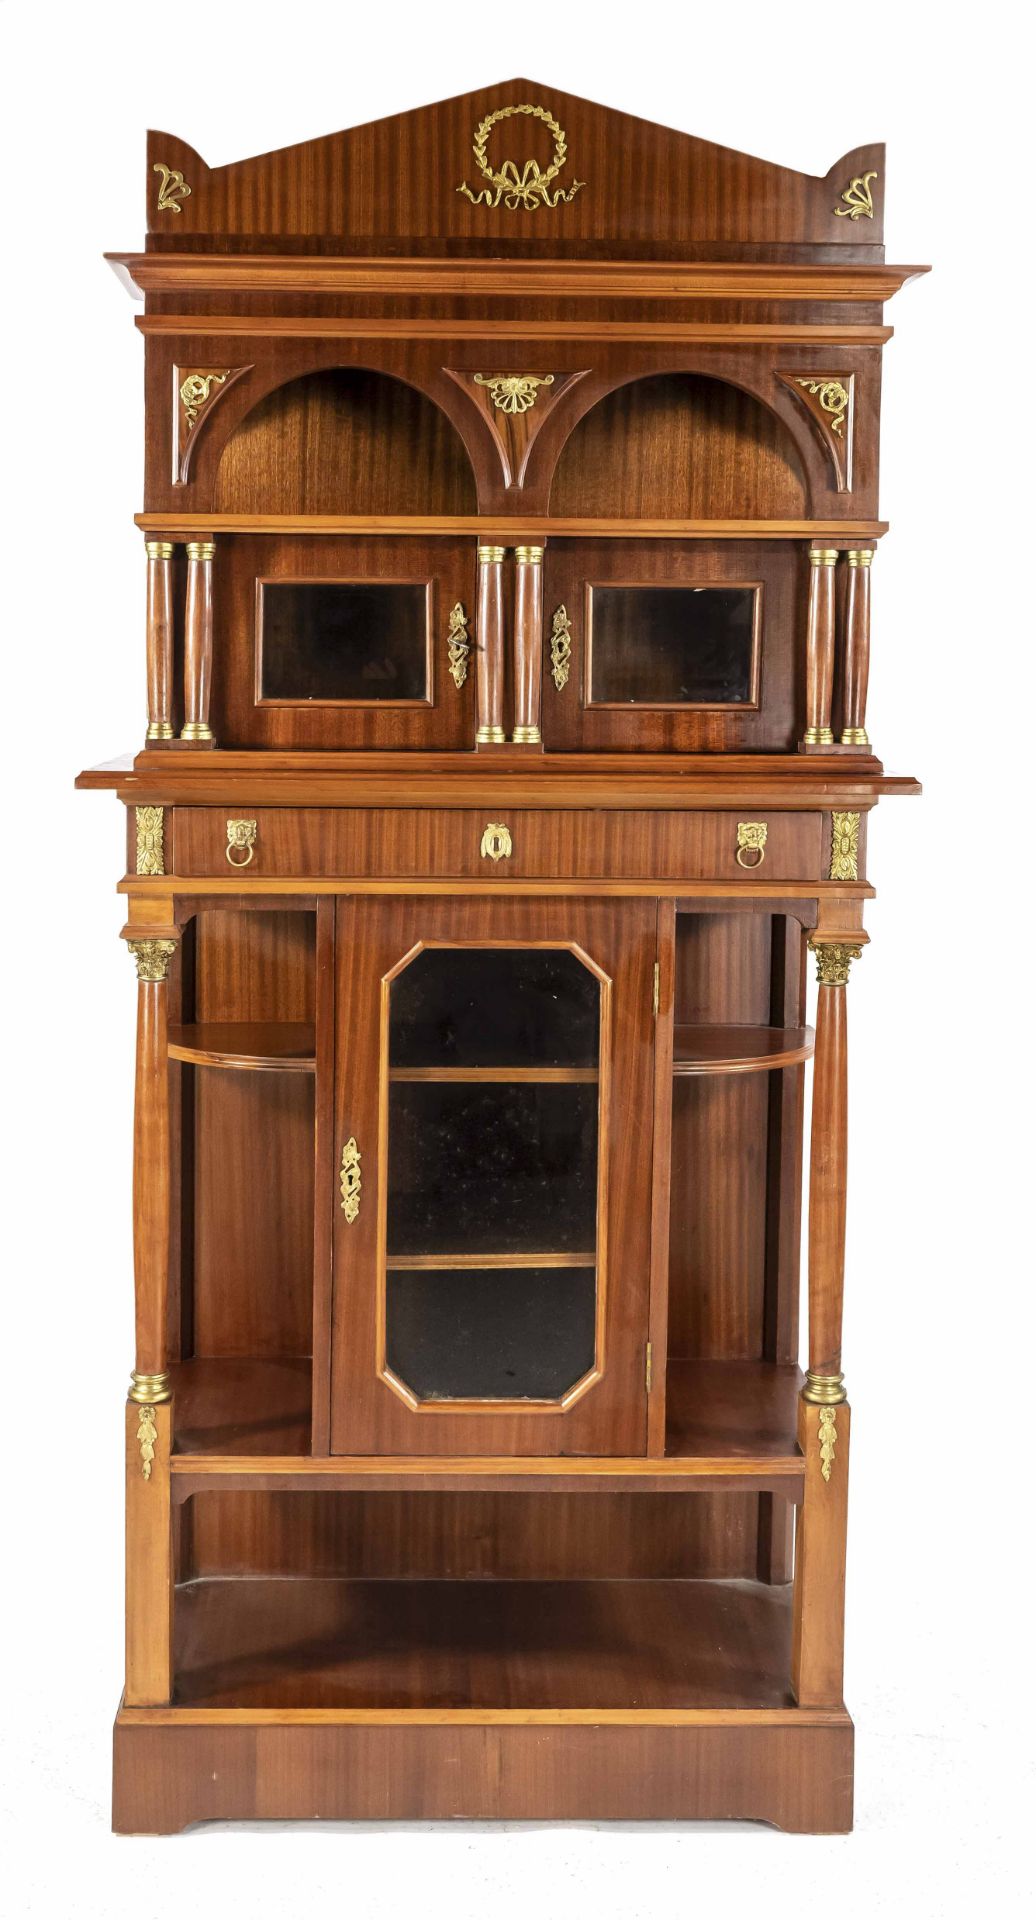 Decorative Empire-style cabinet, 20th century, striped mahogany veneer, rectangular, architecturally